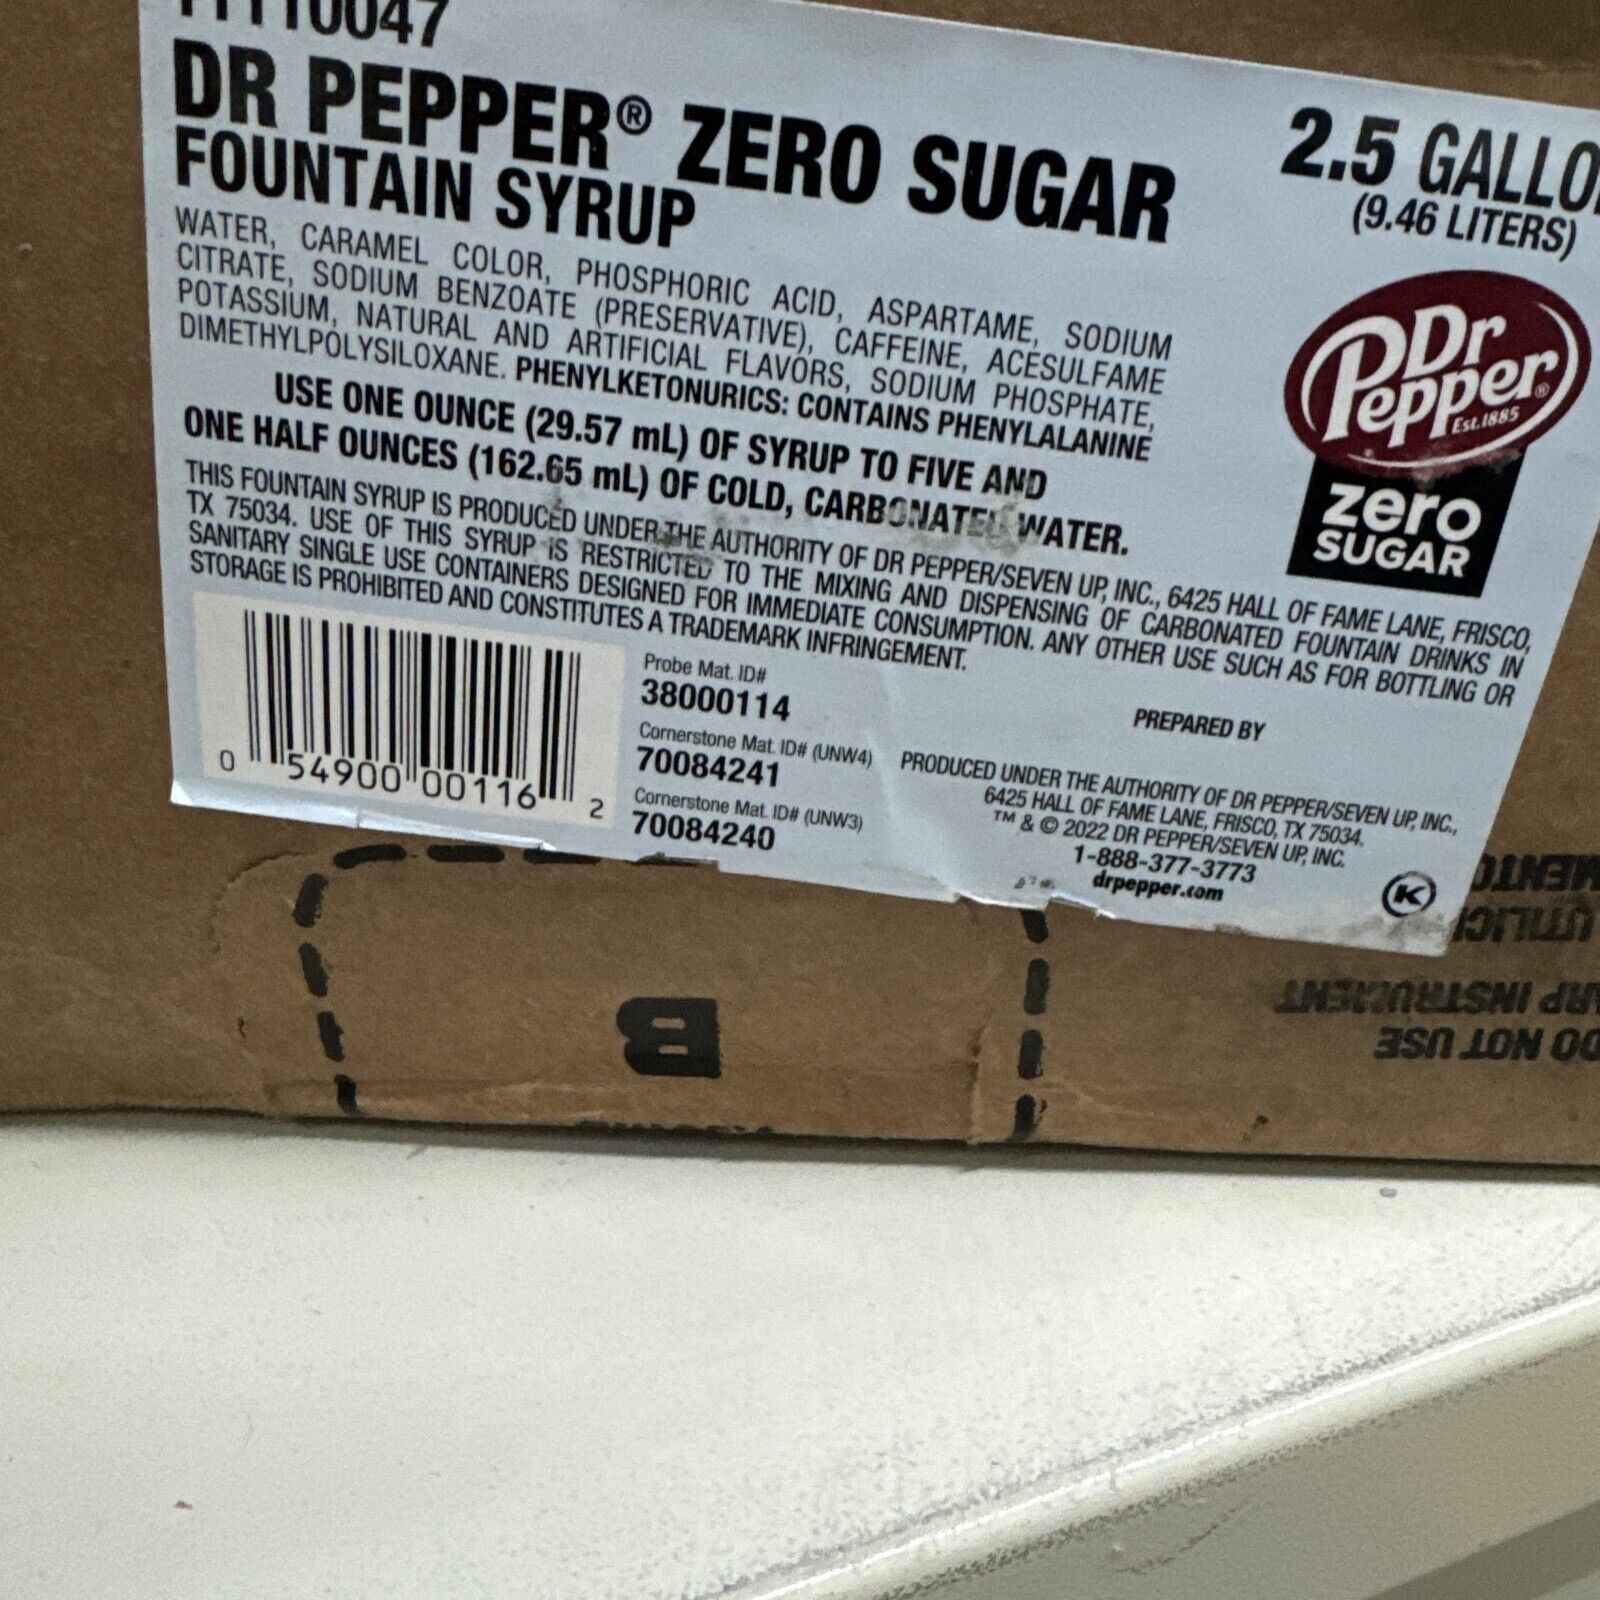 Dr. Pepper ZERO SUGAR  11110047 2.5 Gallon Concentrated Syrup (EXP 9/25/2023)